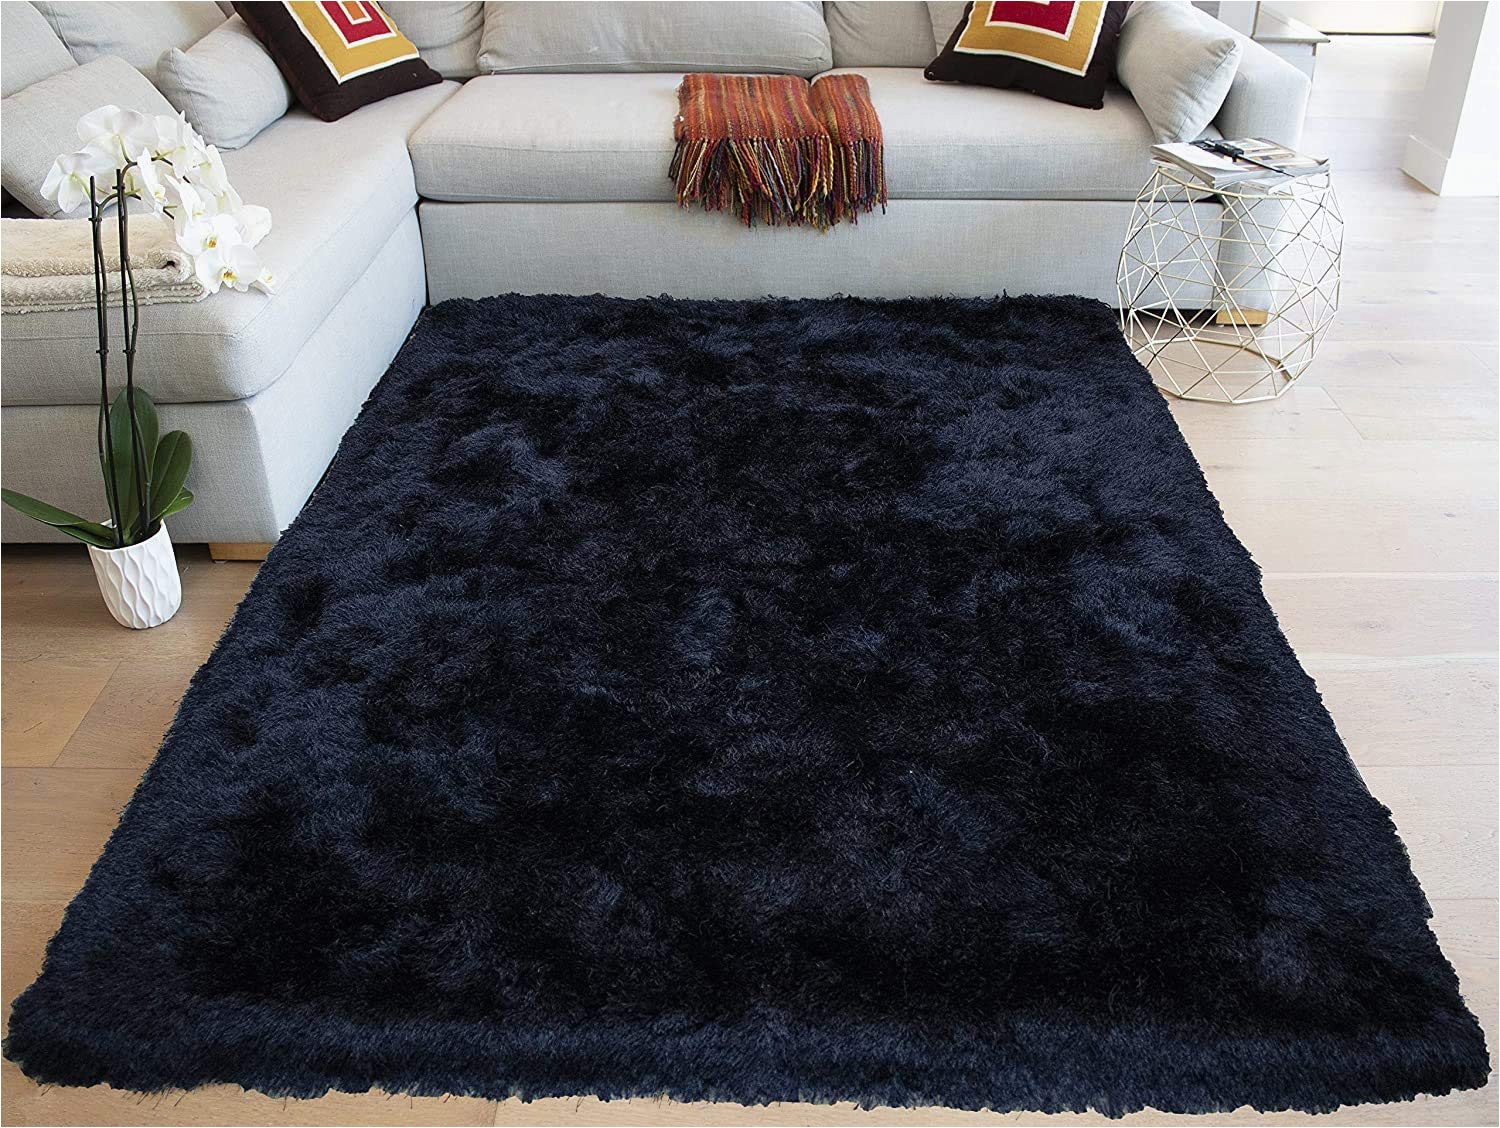 Solid Black area Rug 8×10 8×10 Feet Black Crow Dark Night Color area Rug Carpet Rug solid soft Plush Pile Shag Shaggy Fuzzy Furry Modern Contemporary Decorative Designer …